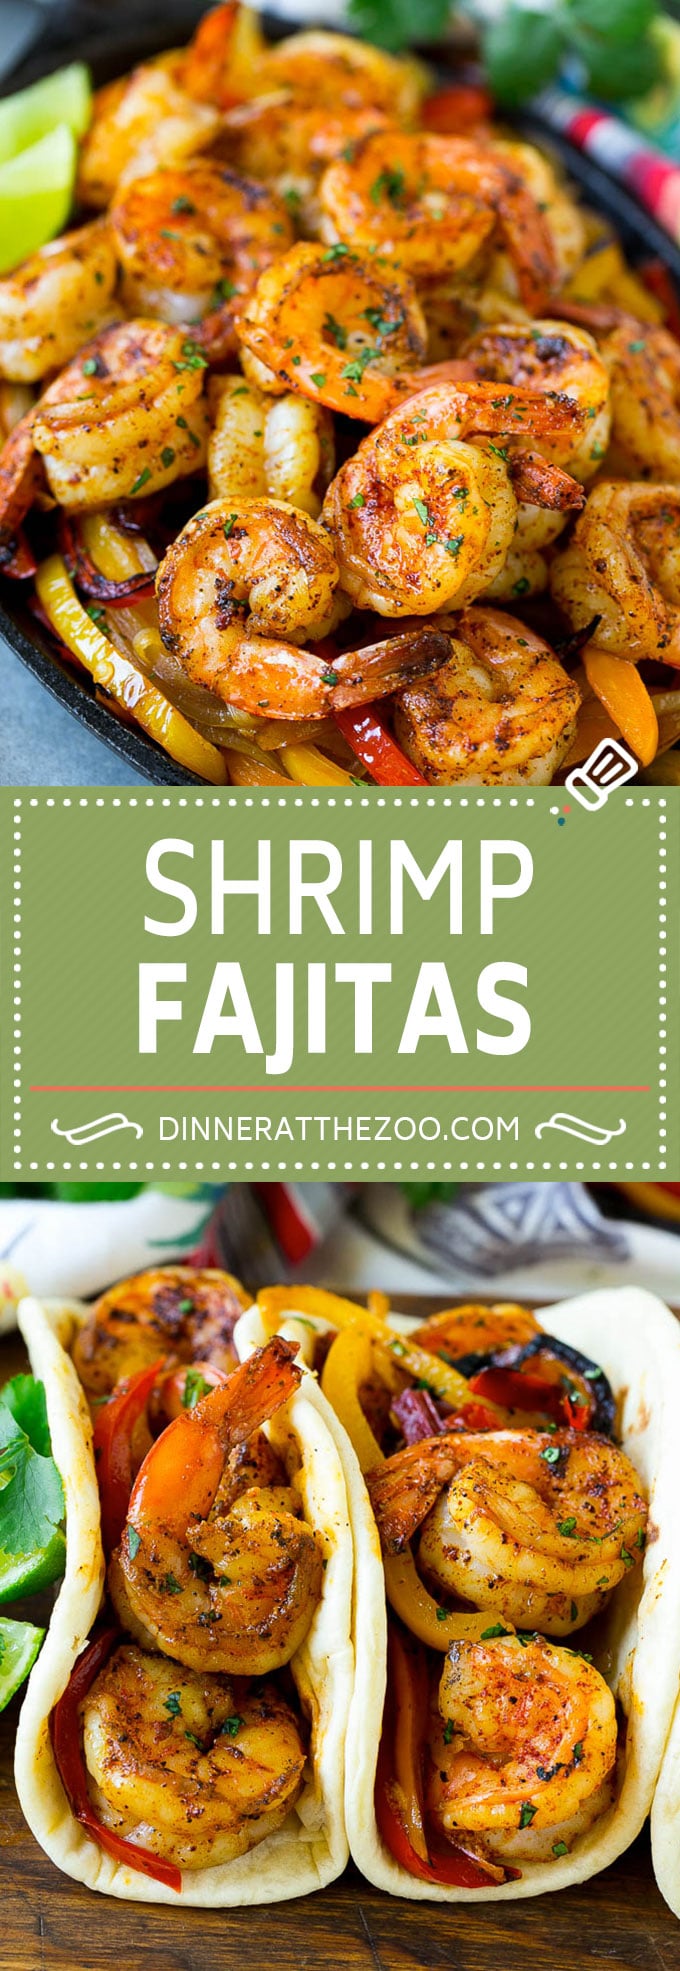 Shrimp Fajitas - Dinner at the Zoo